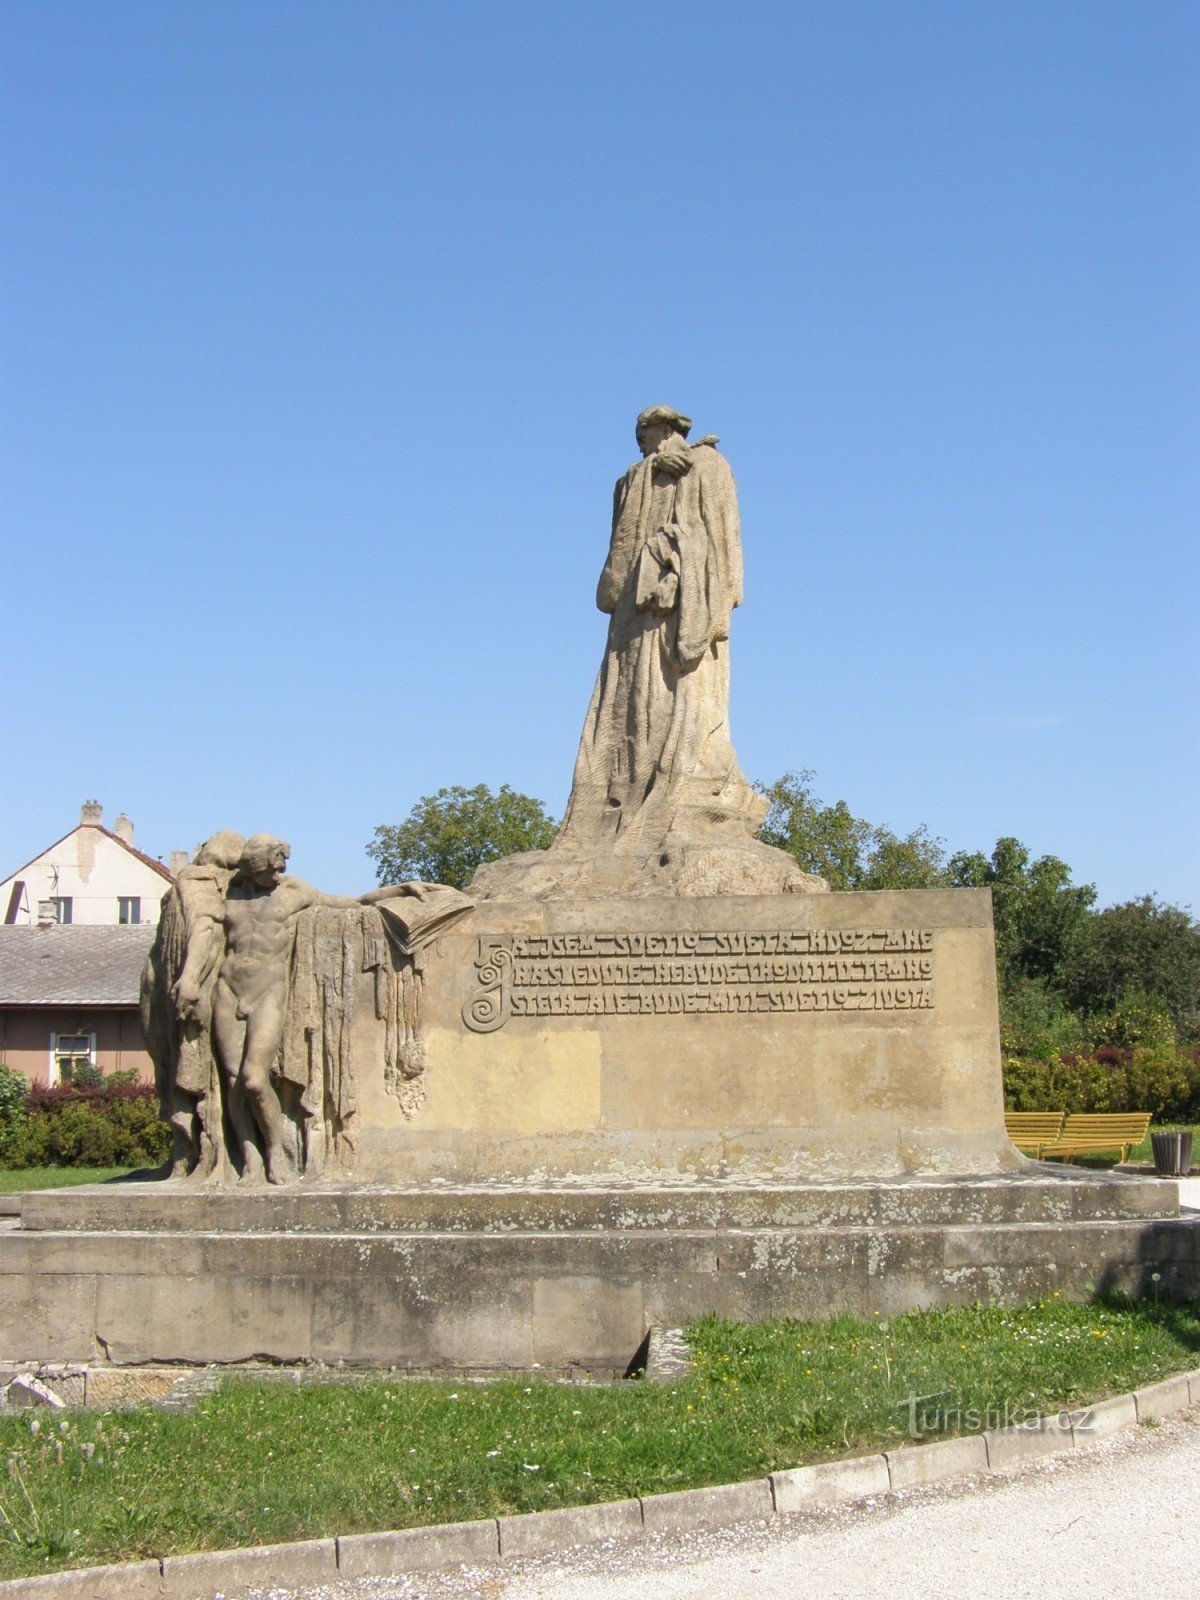 Hořice - spomenik mojstru Janu Husu